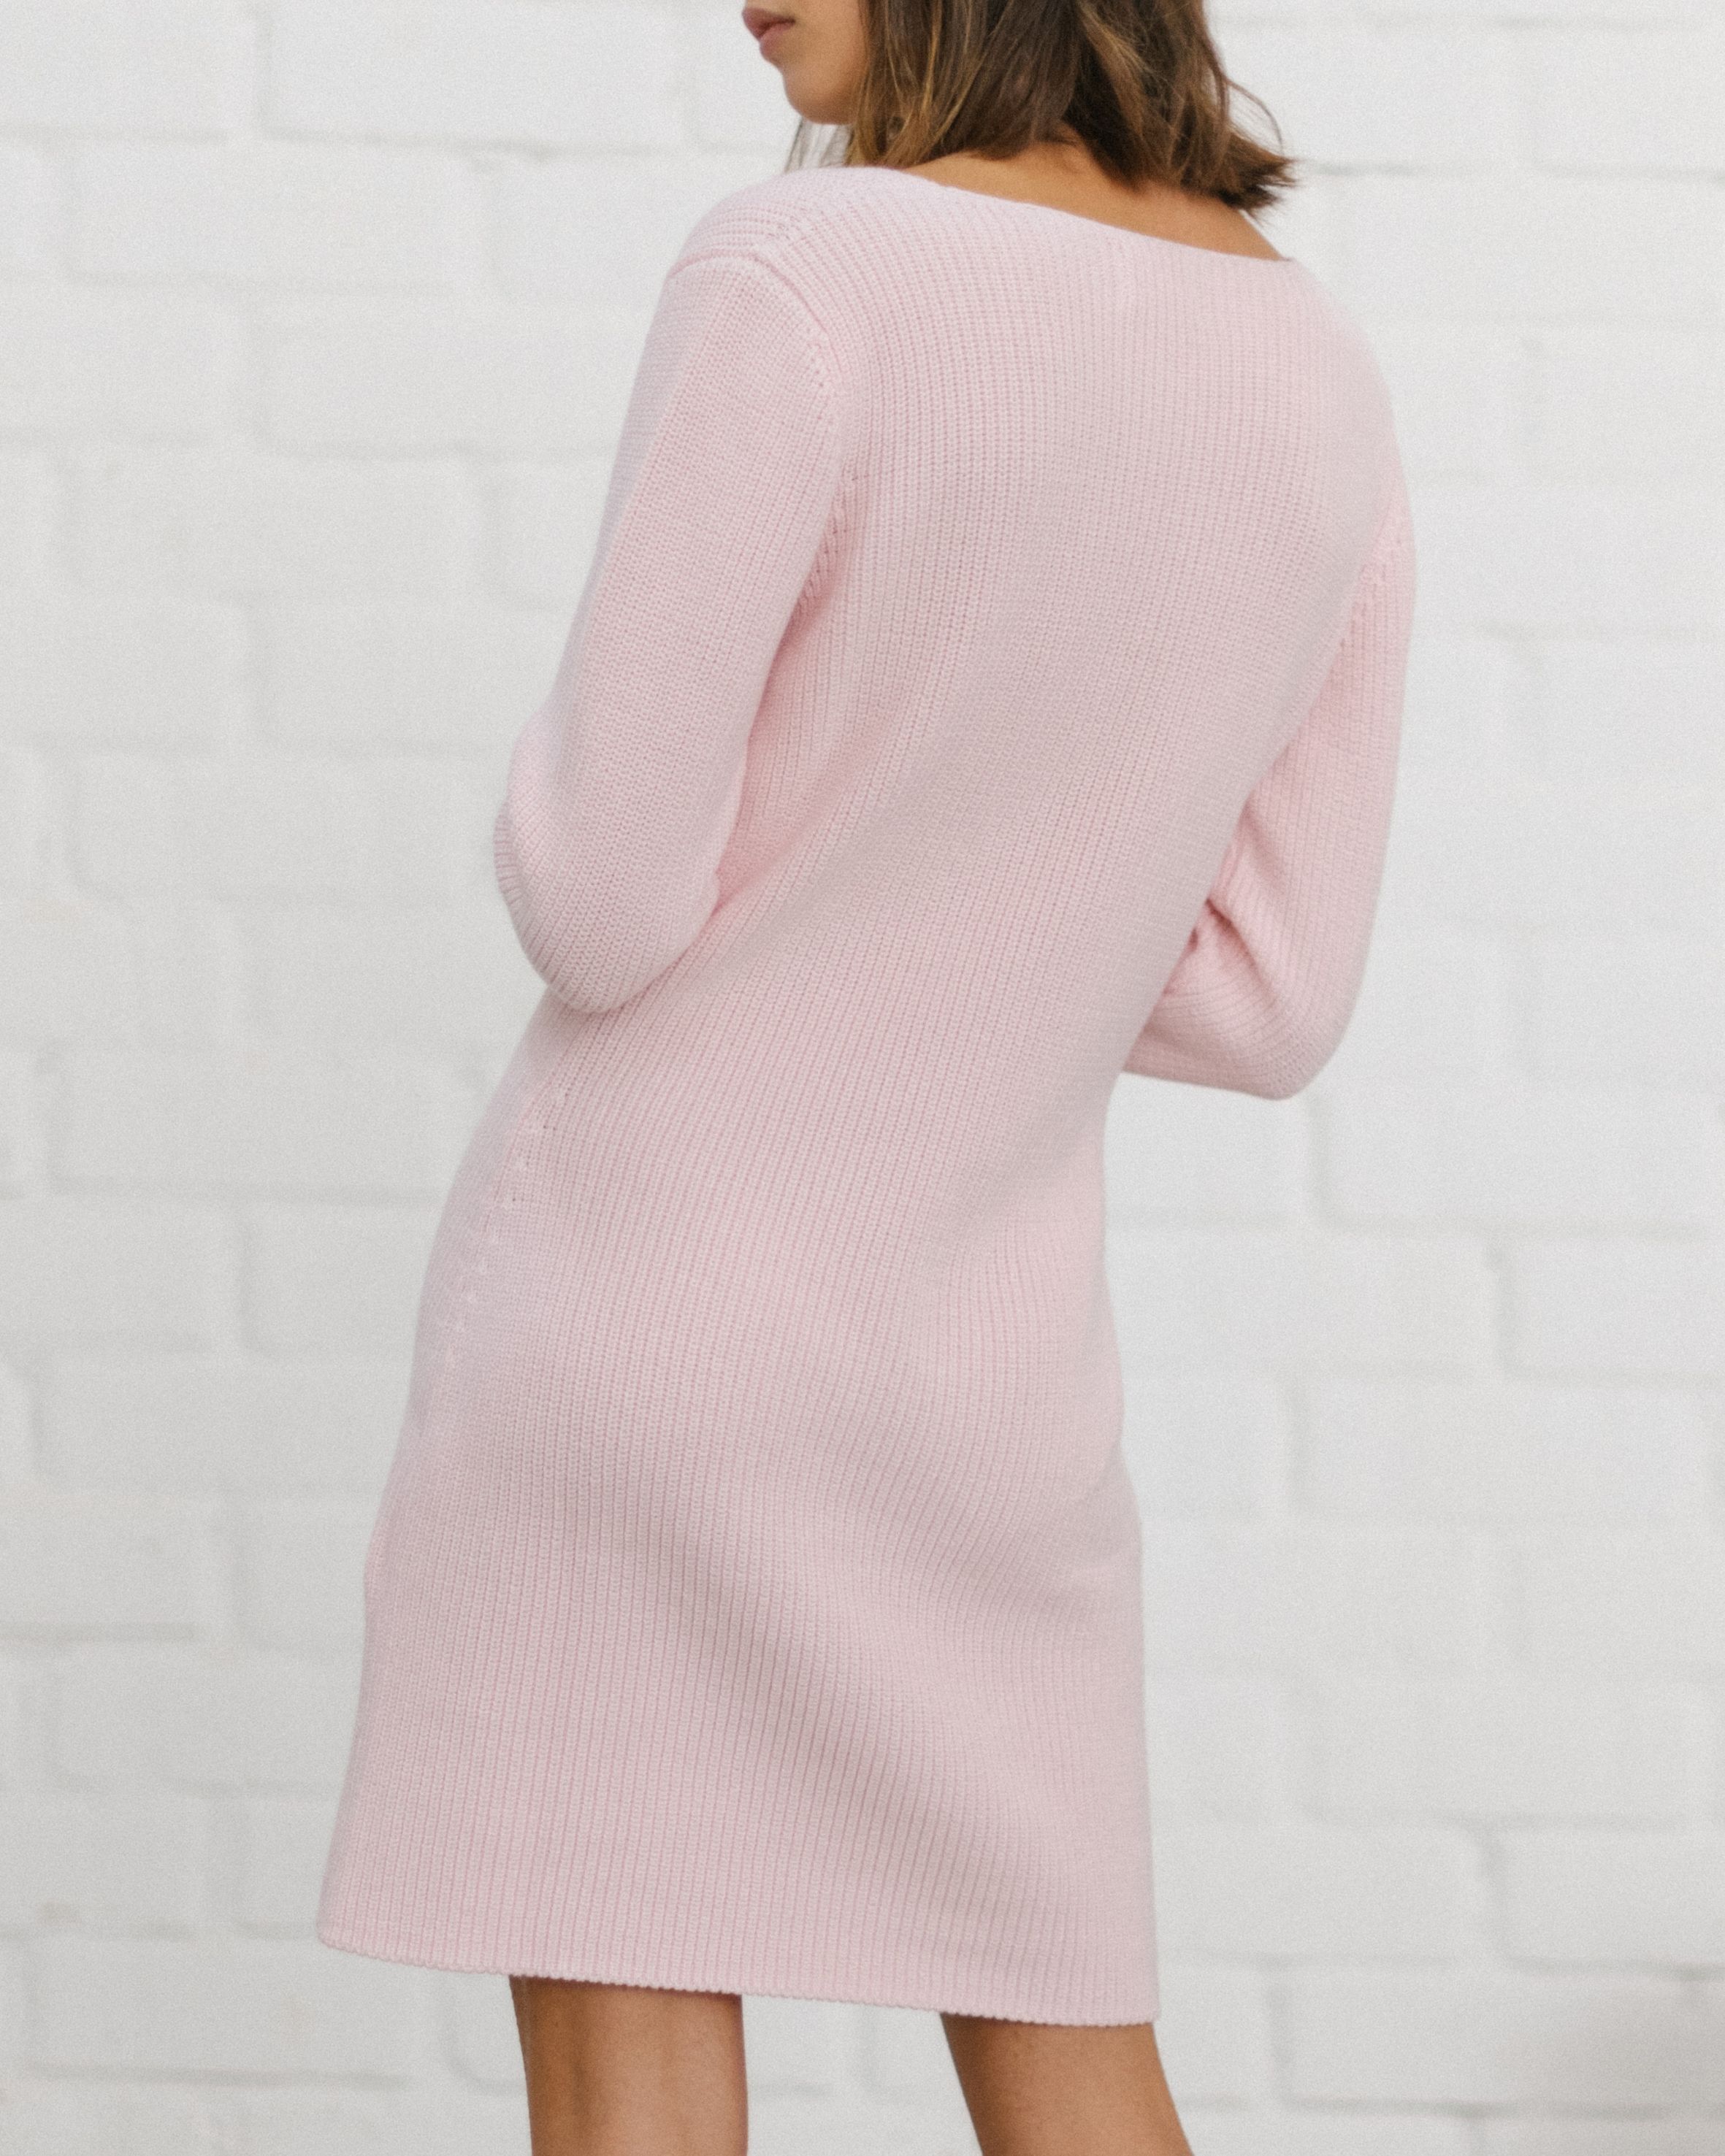 playful-pale-pink-opened-back-knit-dress-cotton-dresses-alohas-270681_39fc91c7-c078-42e4-97b7-9f089d7df7d3.jpg